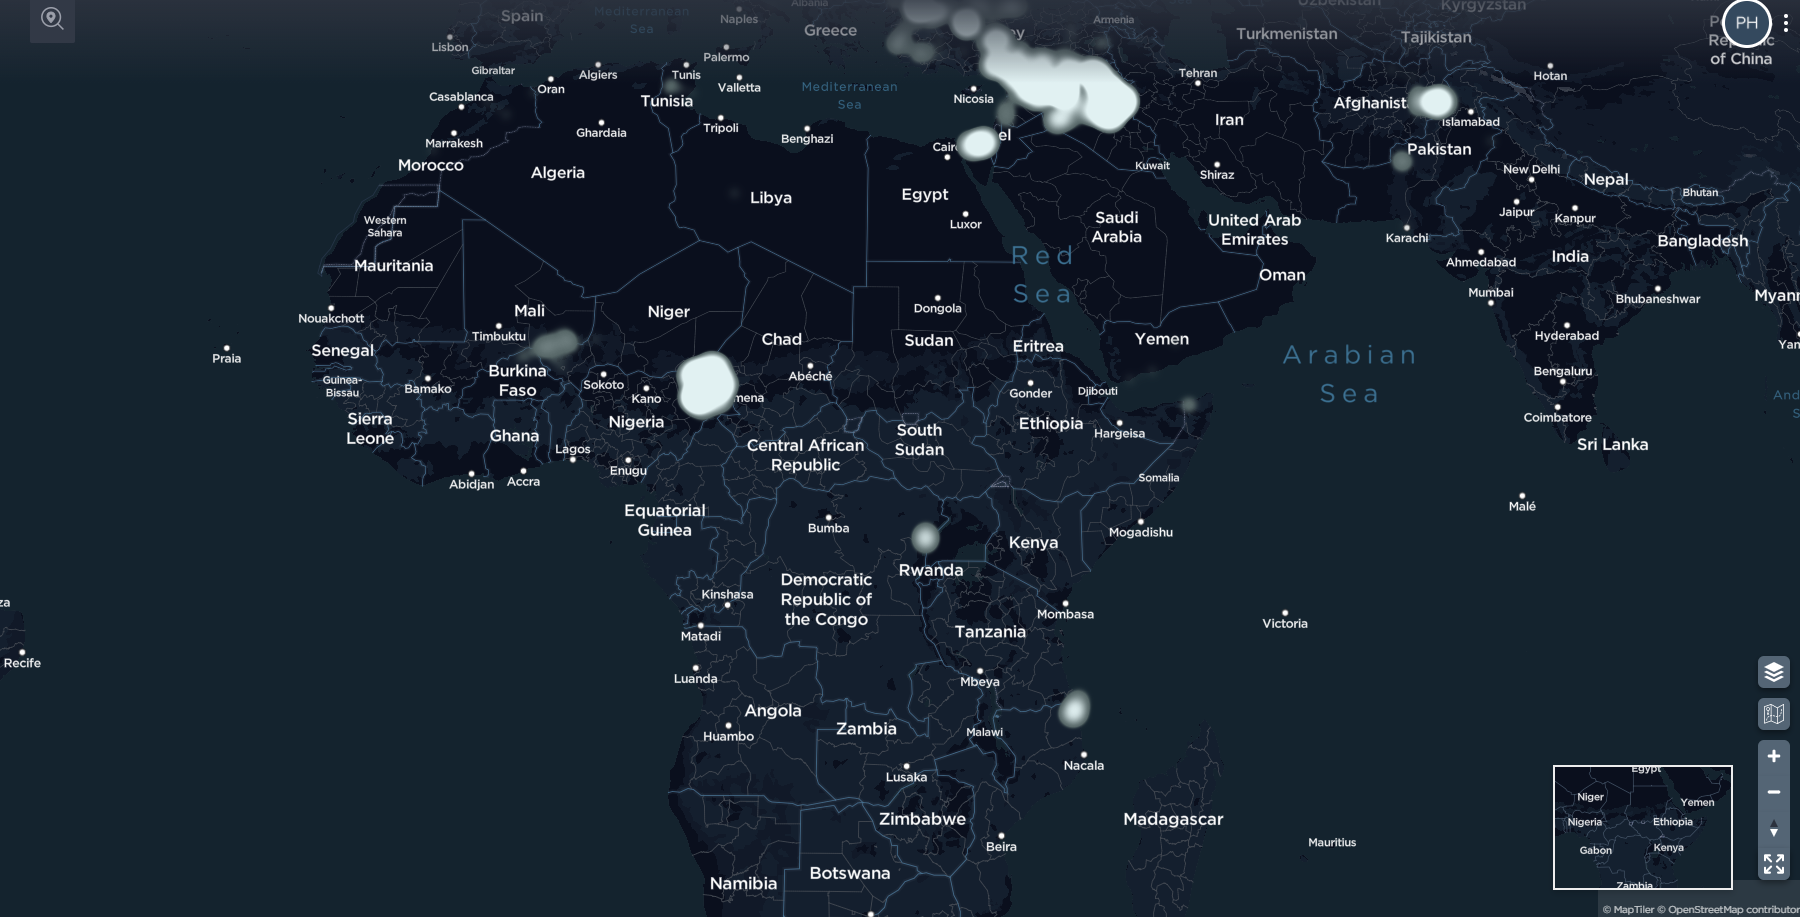 spread of ISIS in Africa heatmap